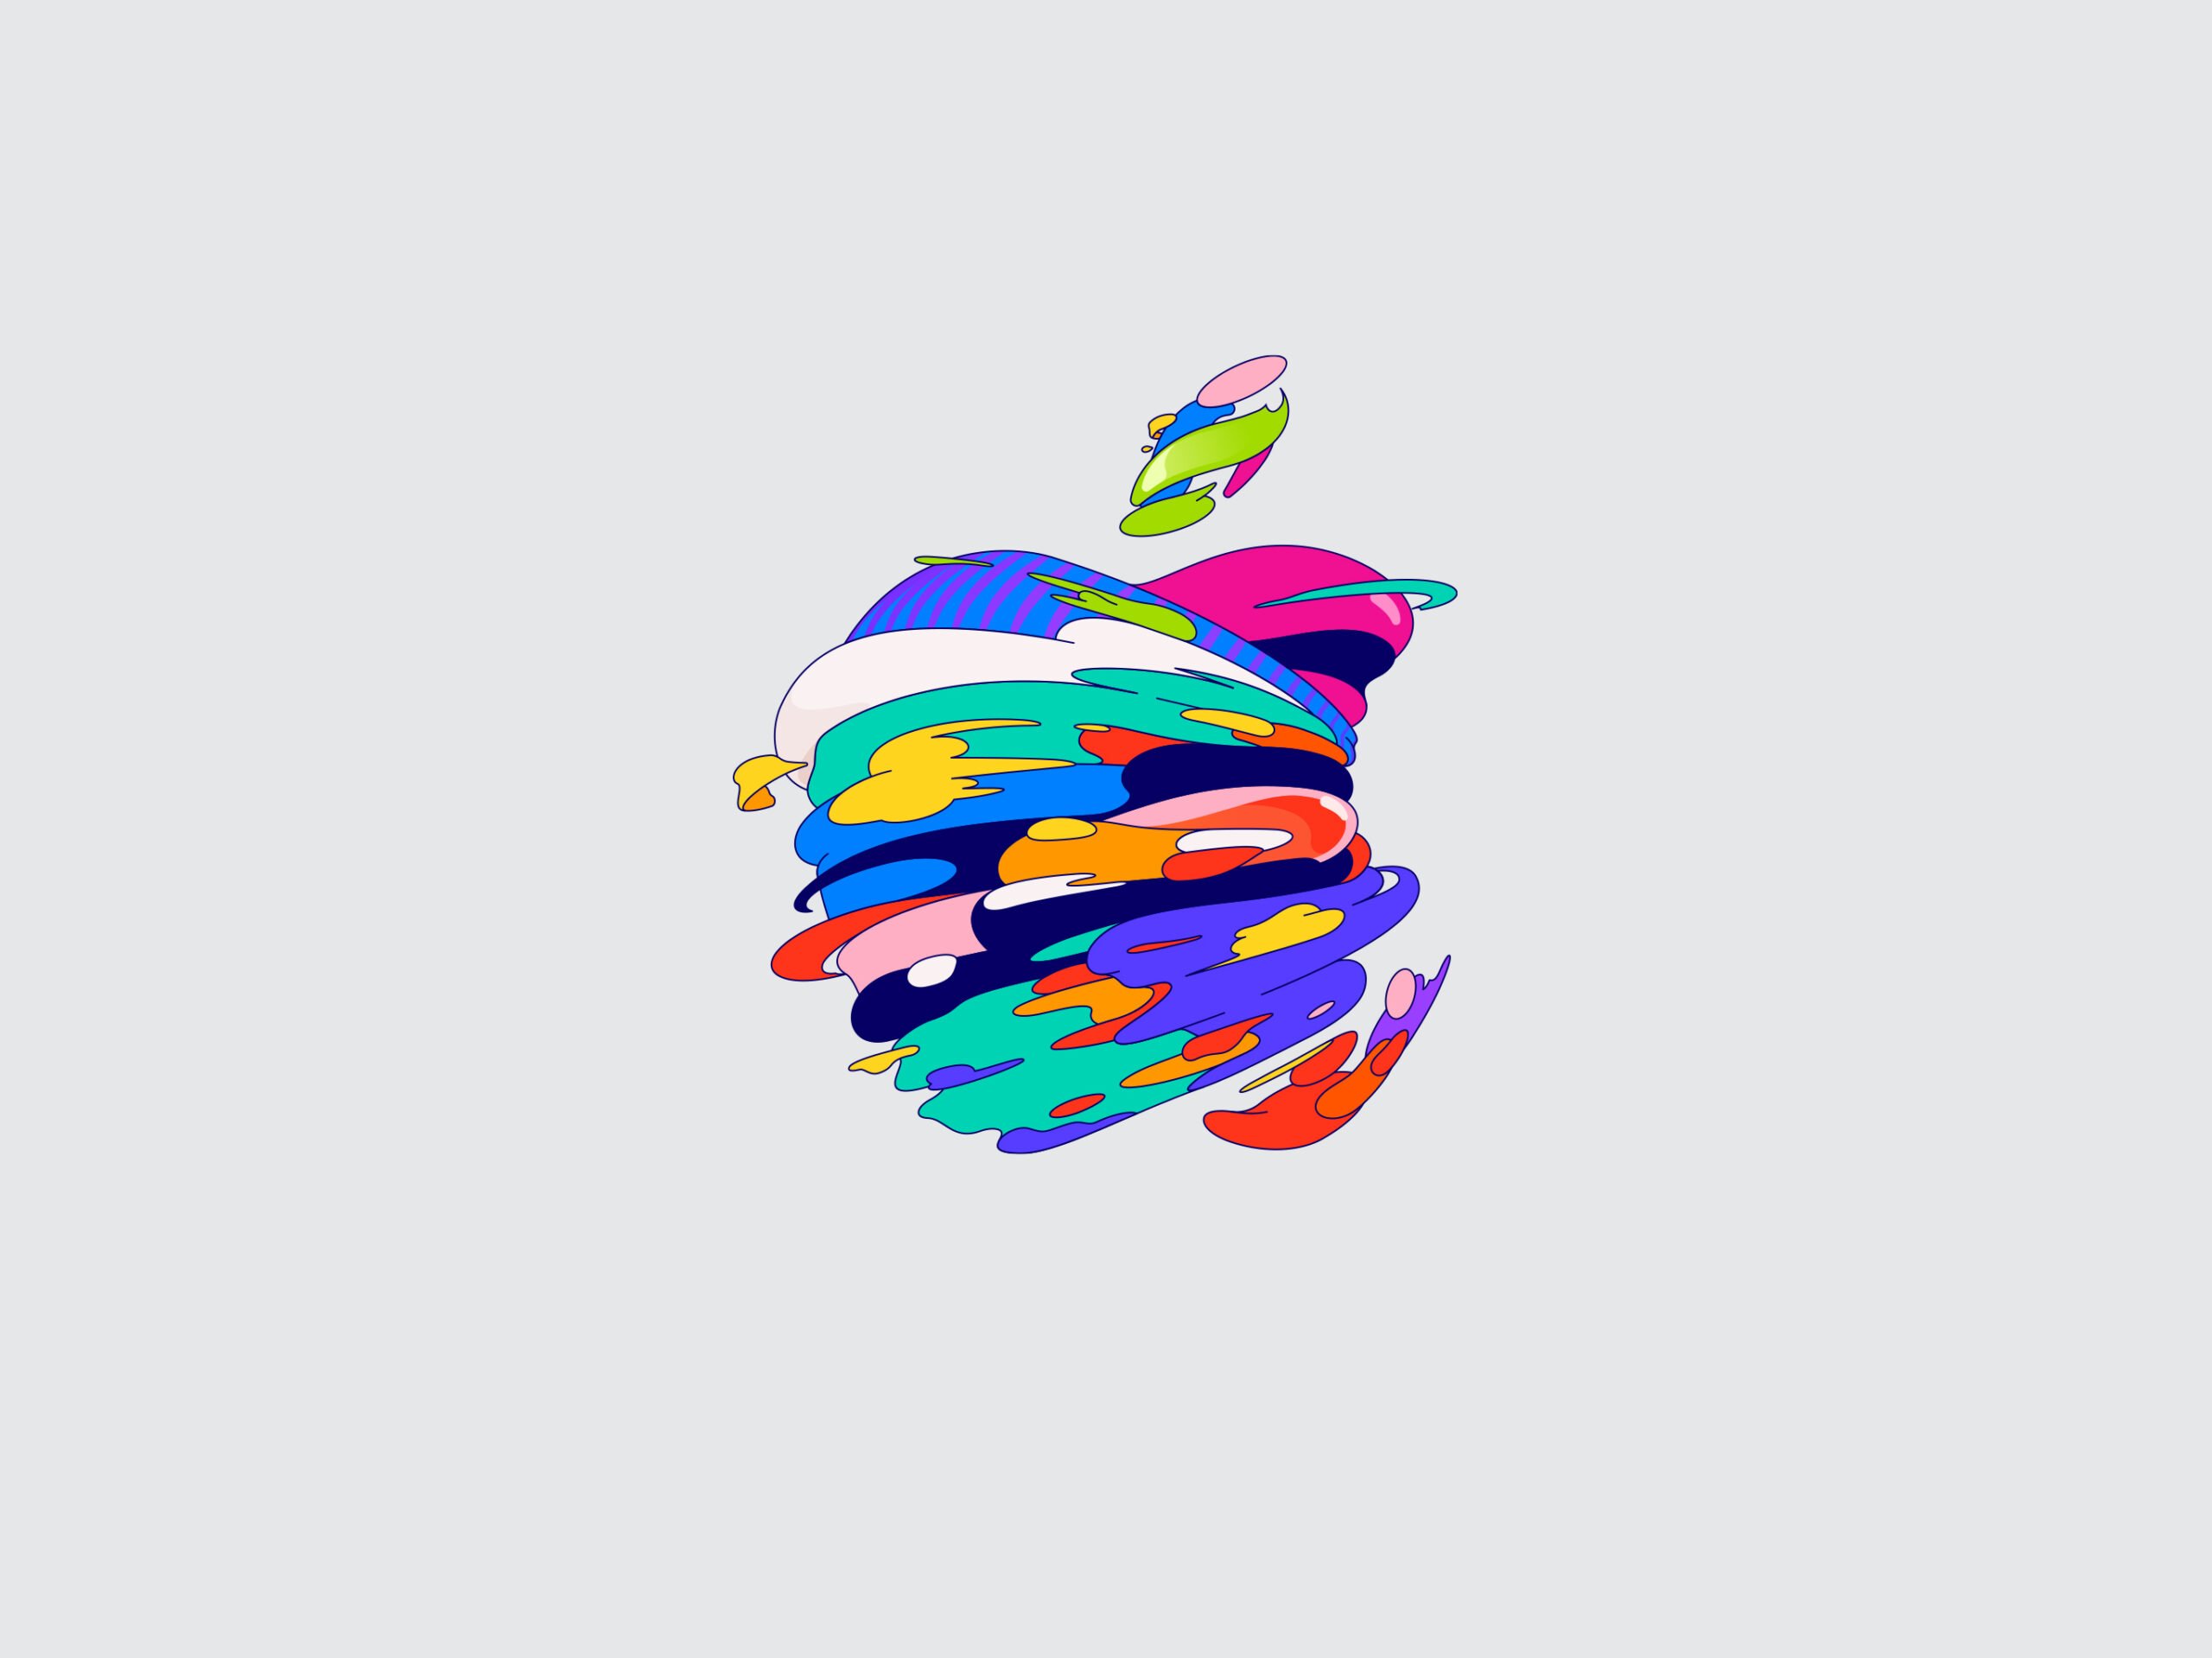 Wallpaper gray background and multicolored bitten apple logo